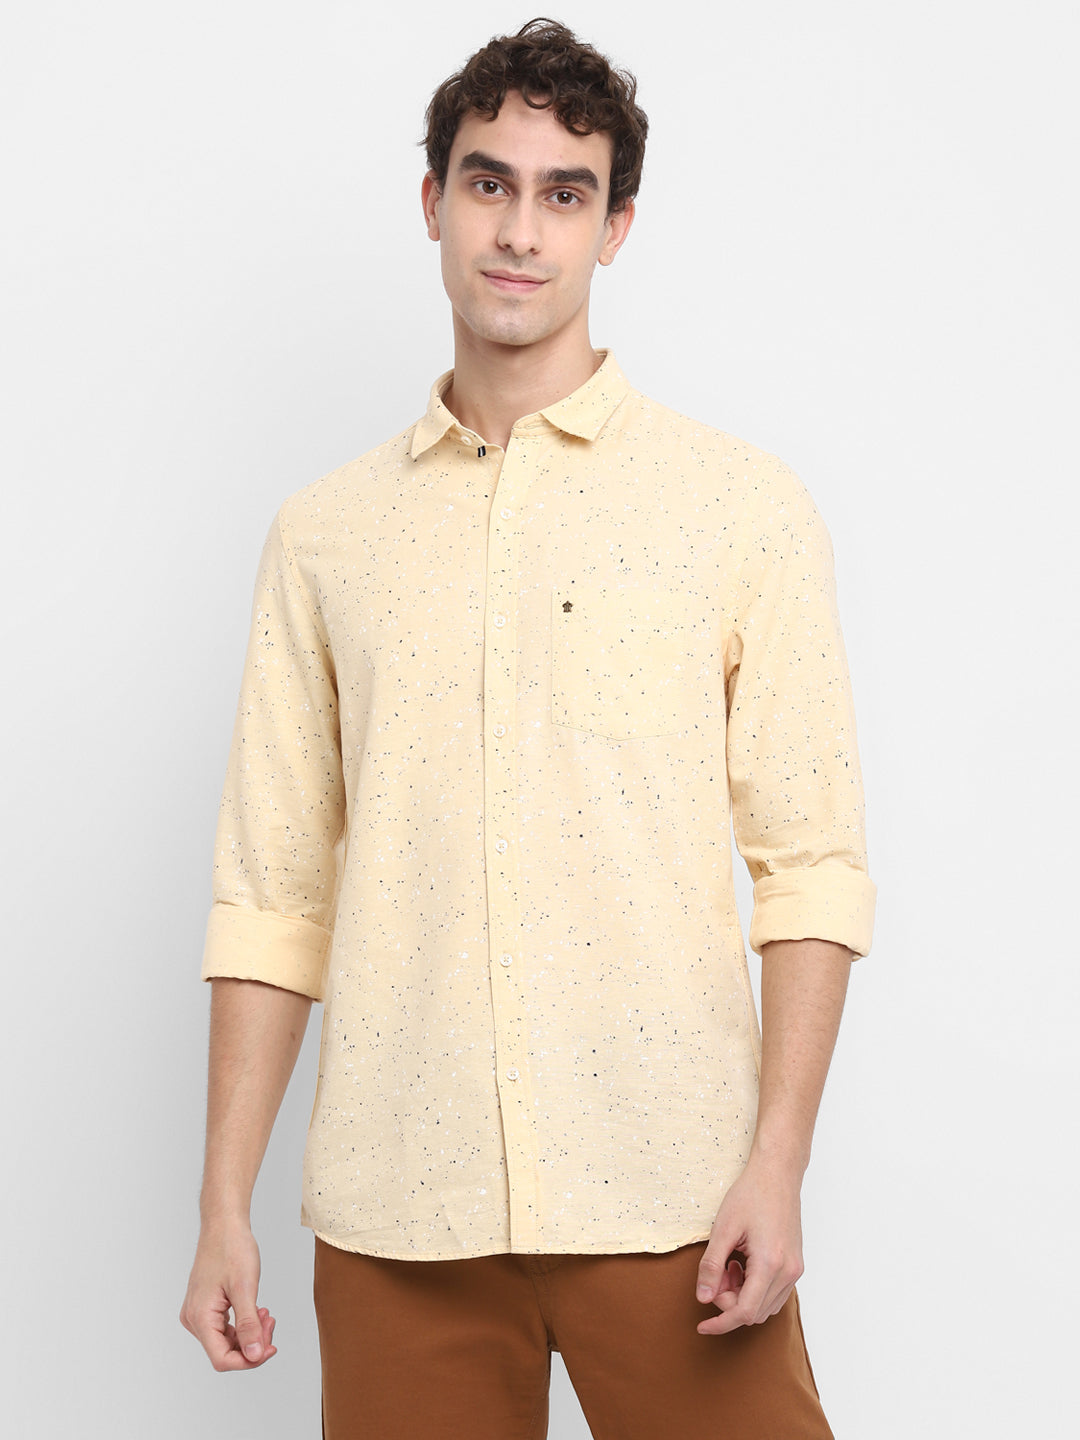 Printed Yellow Slim Fit Causal Shirt